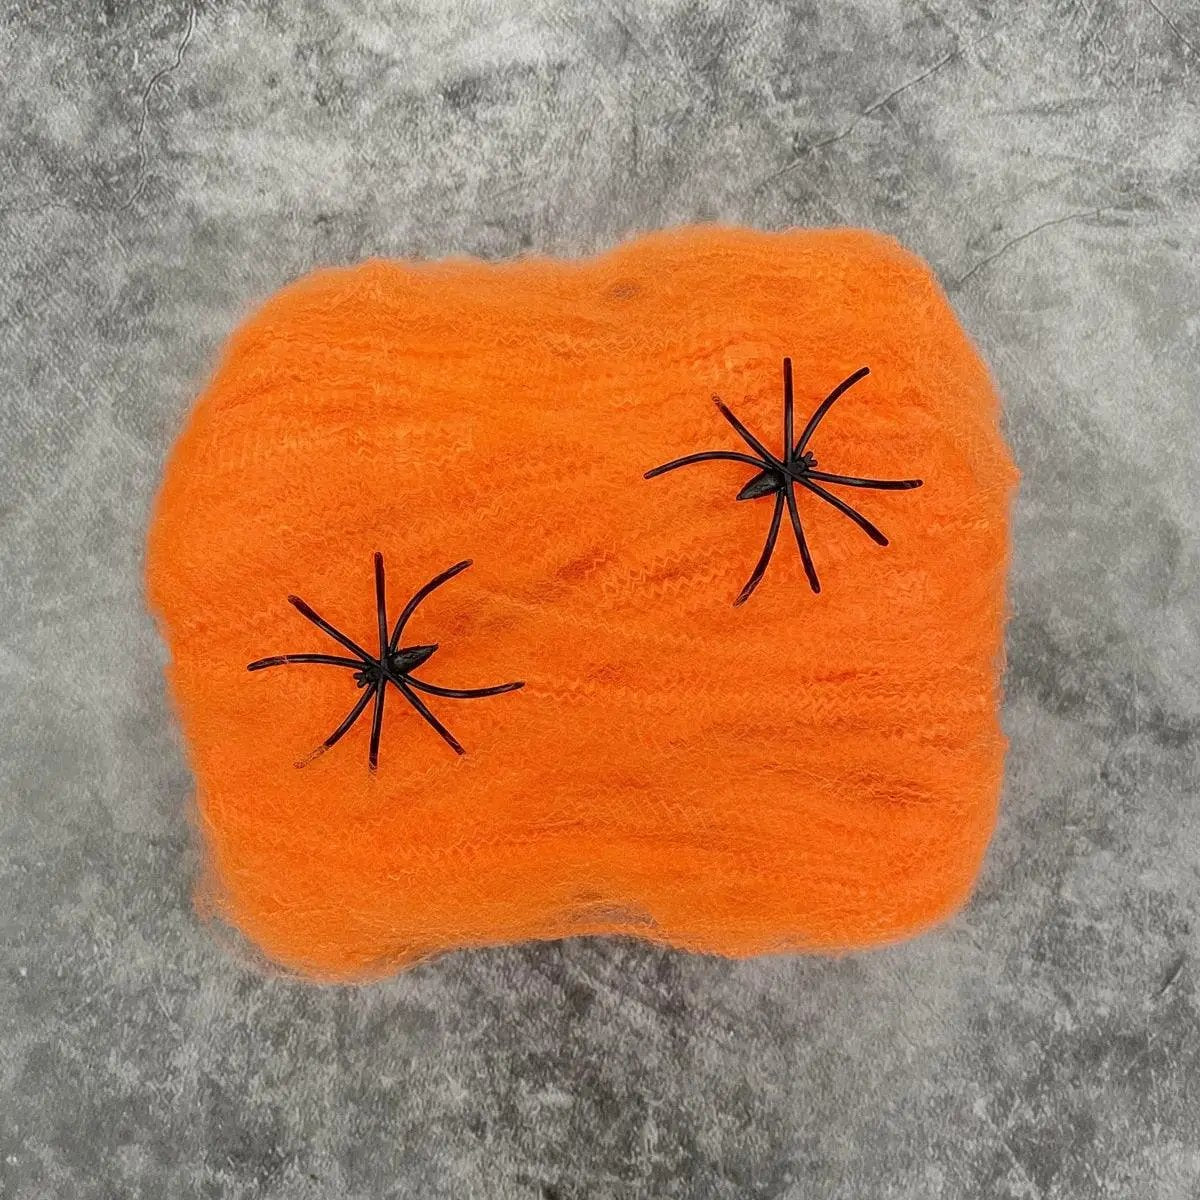 a close up of an orange piece of yarn